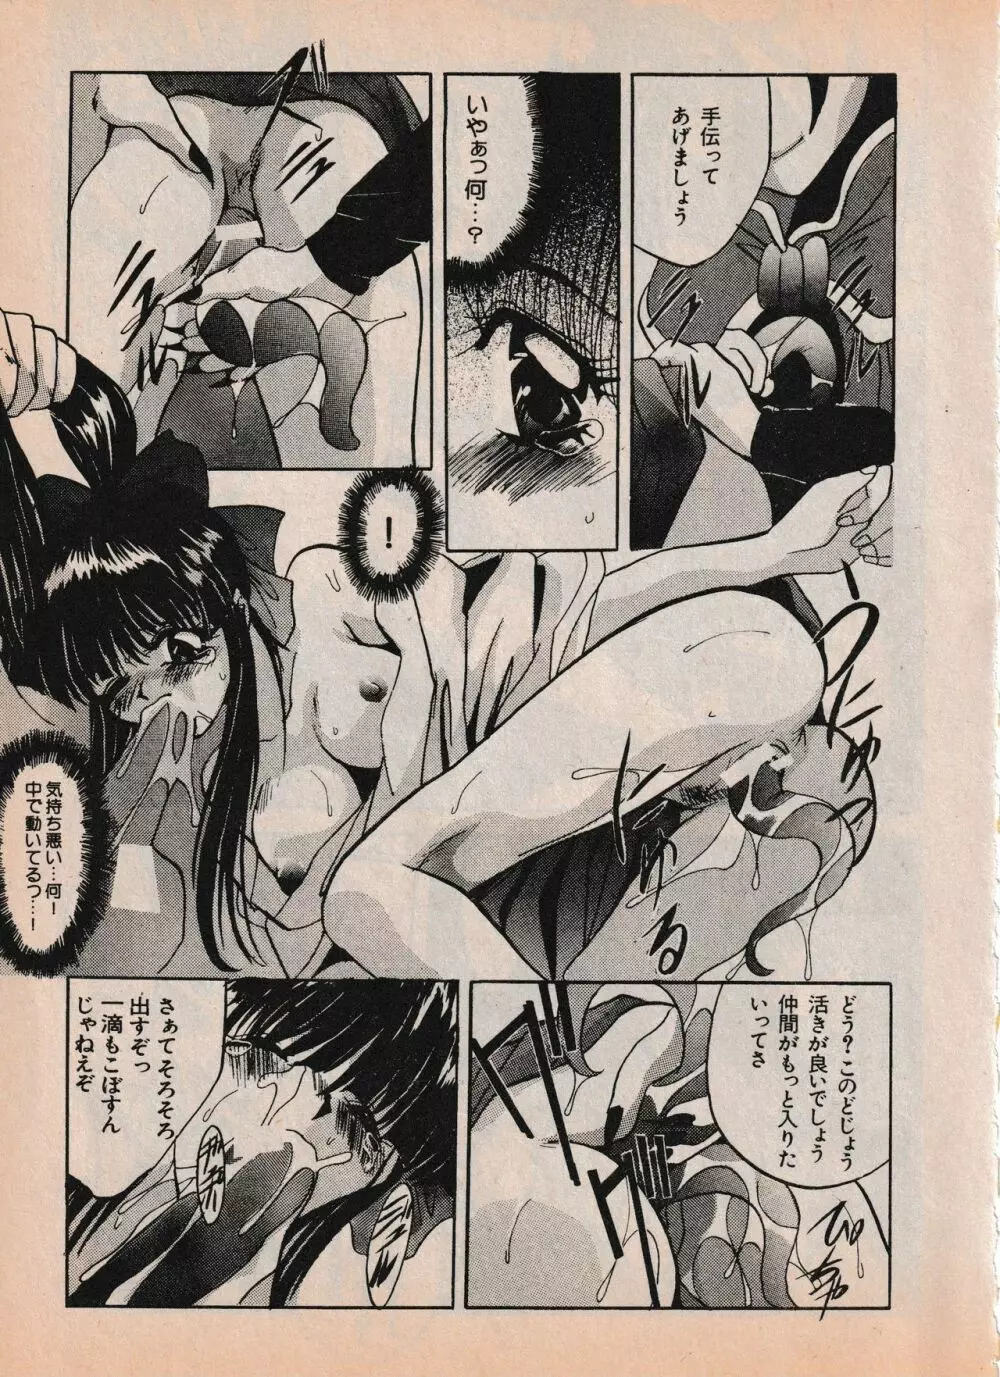 Sailor X vol. 4 - Sailor X vs. Cunty Horny! - page60